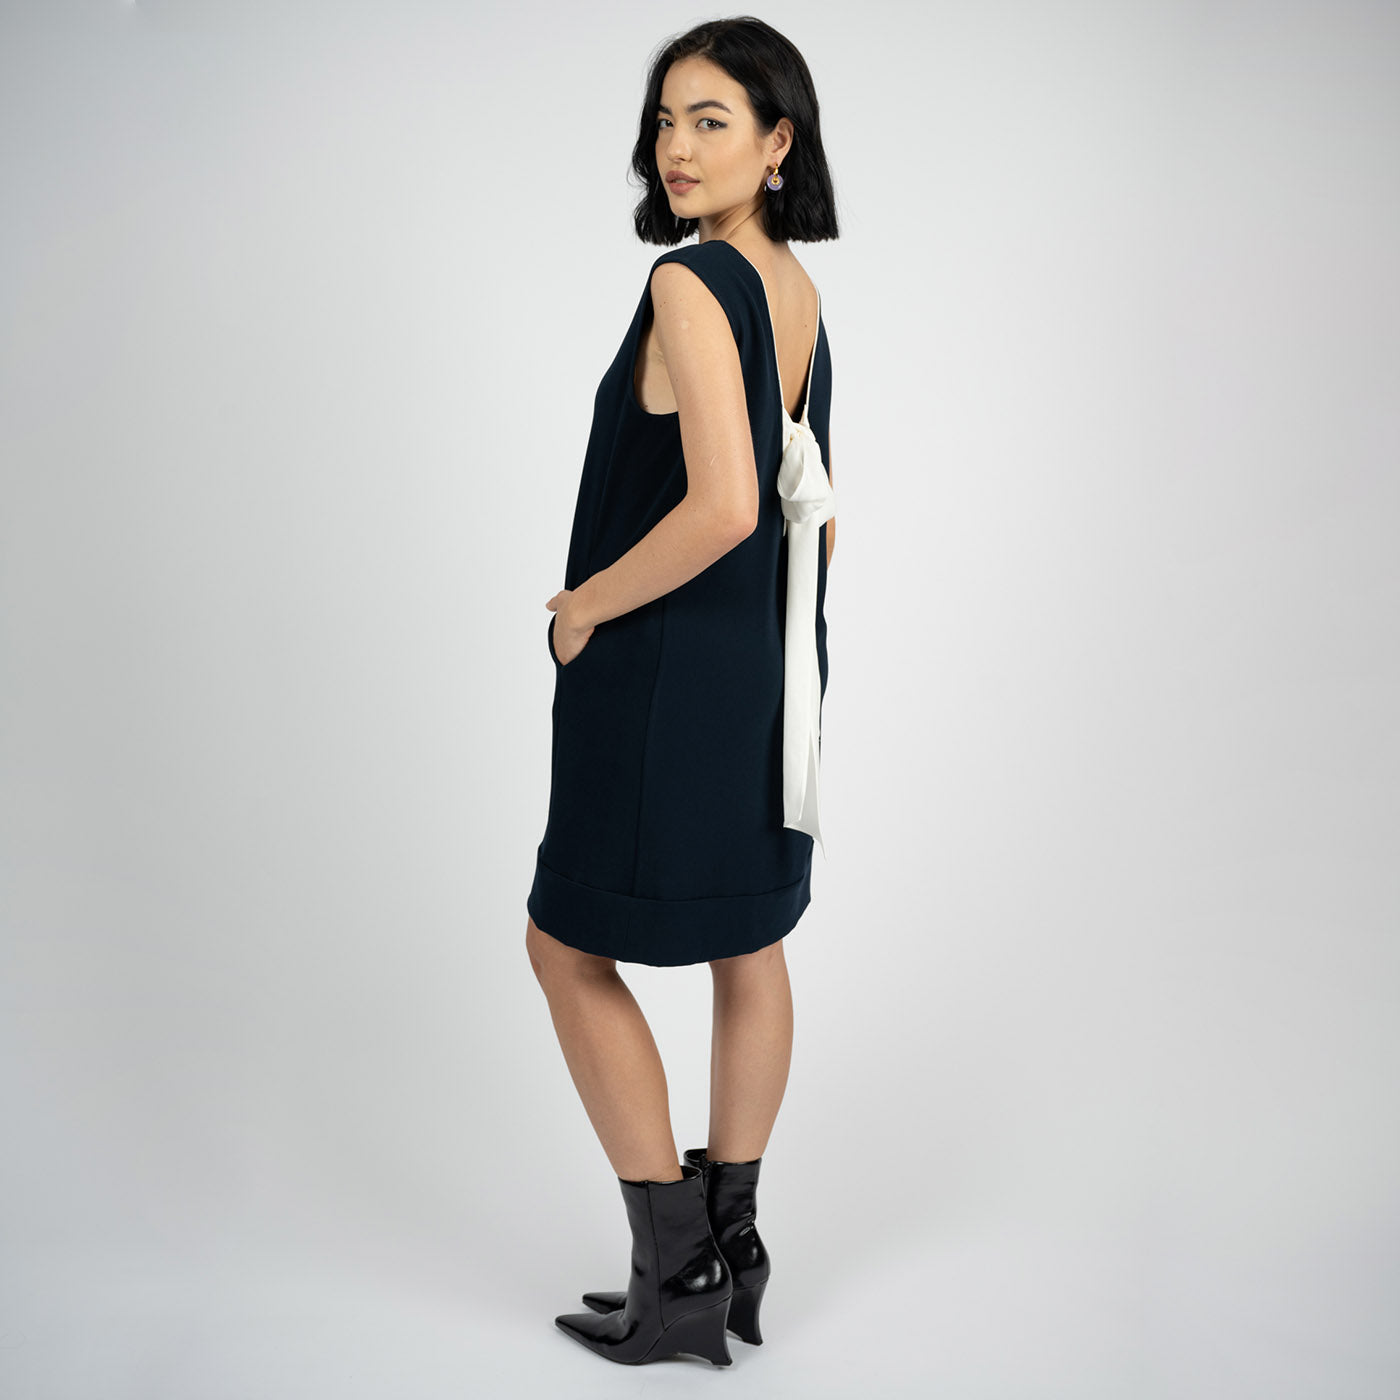 "Lauren” Acetate Sleeveless Mini Dress with a Bow